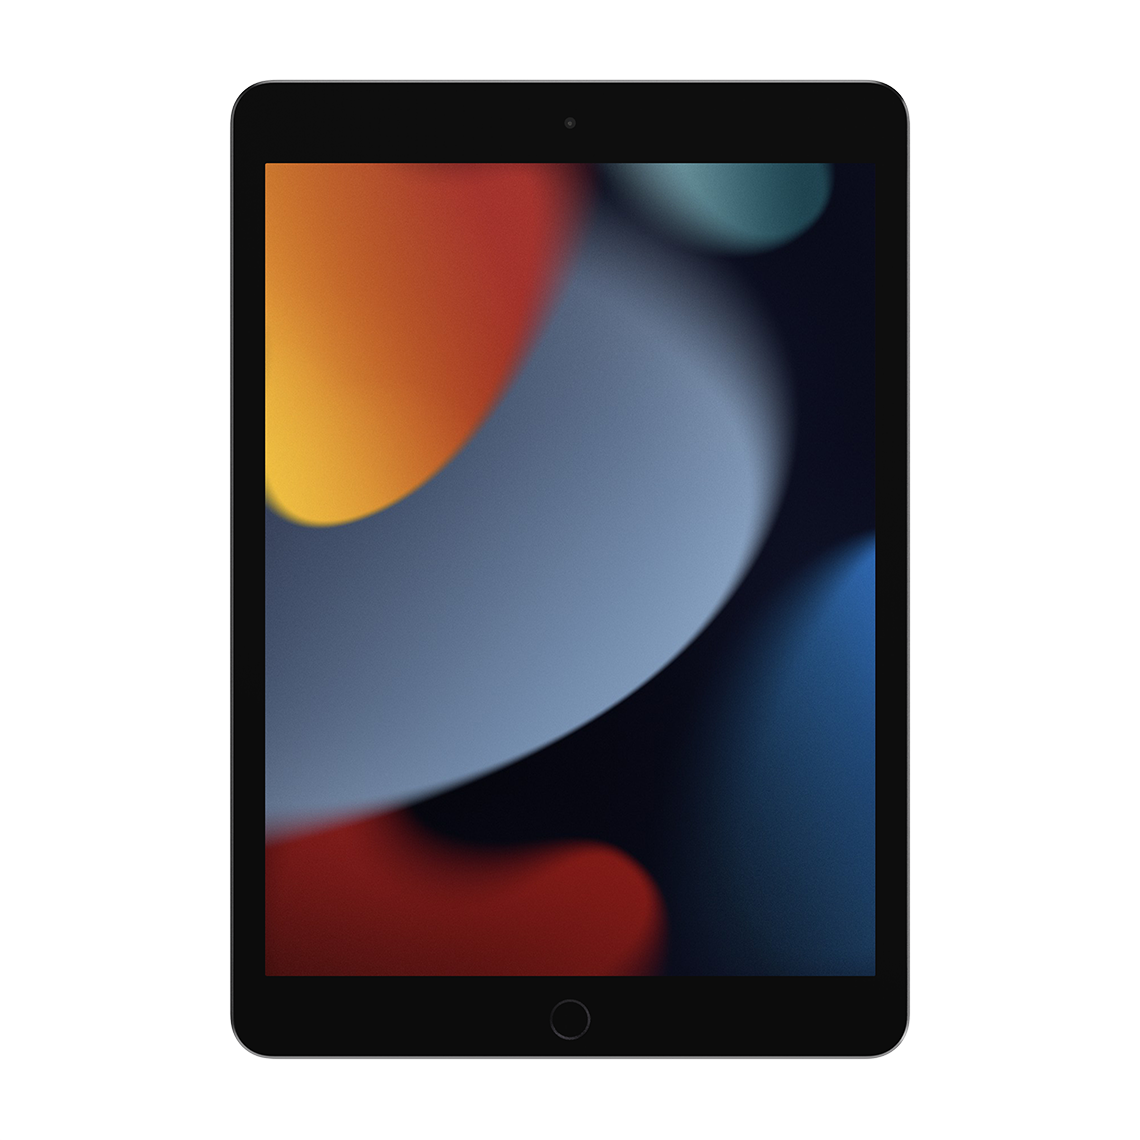 Apple iPad 10.2-inch 9th Generation - Space Gray - 256GB, Wi-Fi